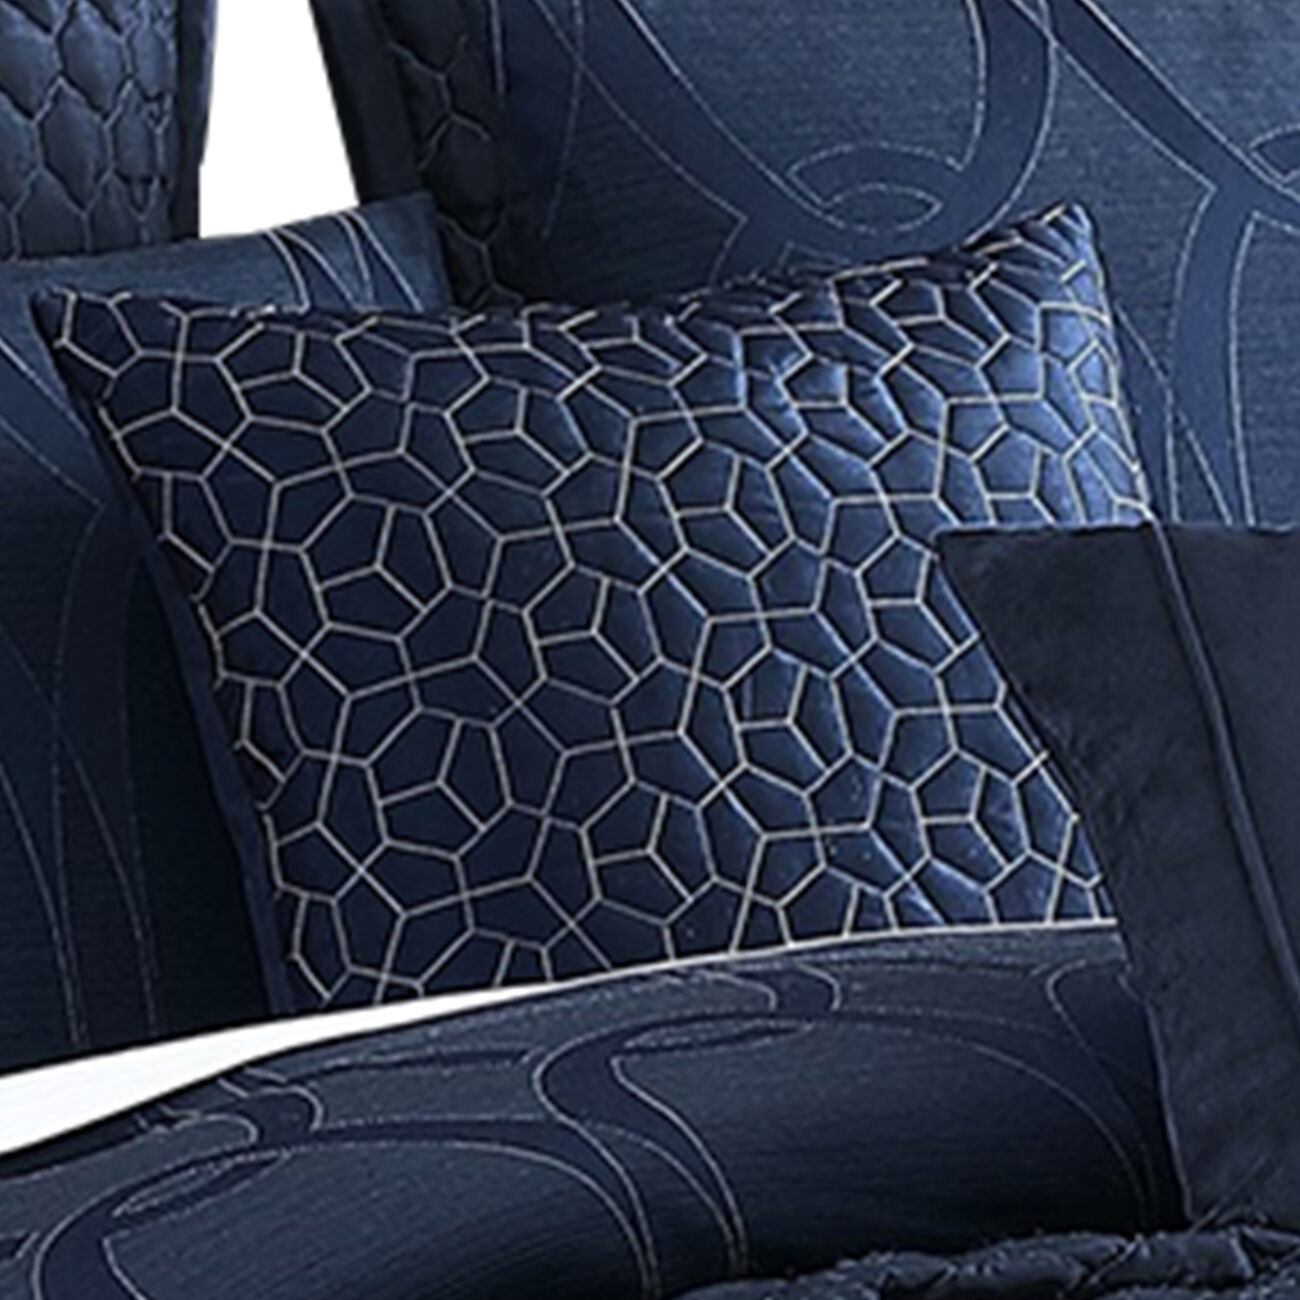 10 Piece Queen Polyester Comforter Set with Geometric Print, Dark Blue